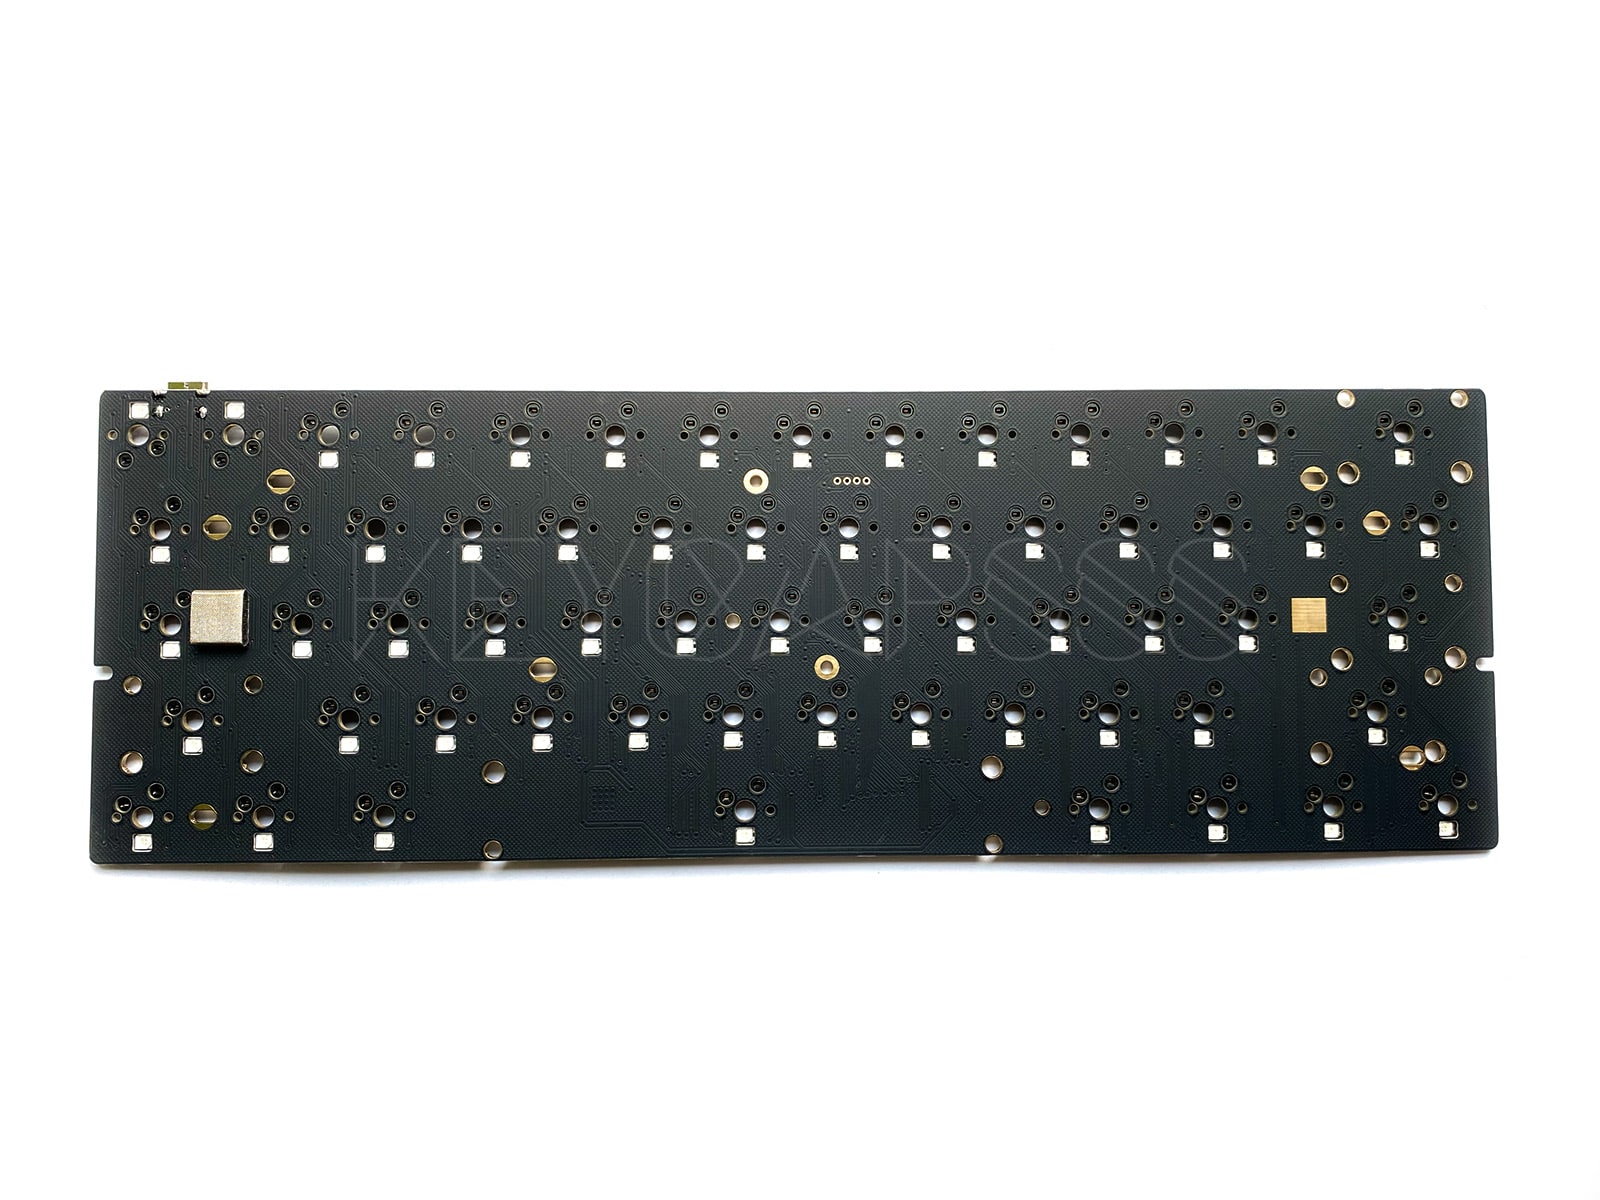 DZ60RGB-ANSI V2 60% Mechanical Keyboard PCB - USB-C Hot Swap ...